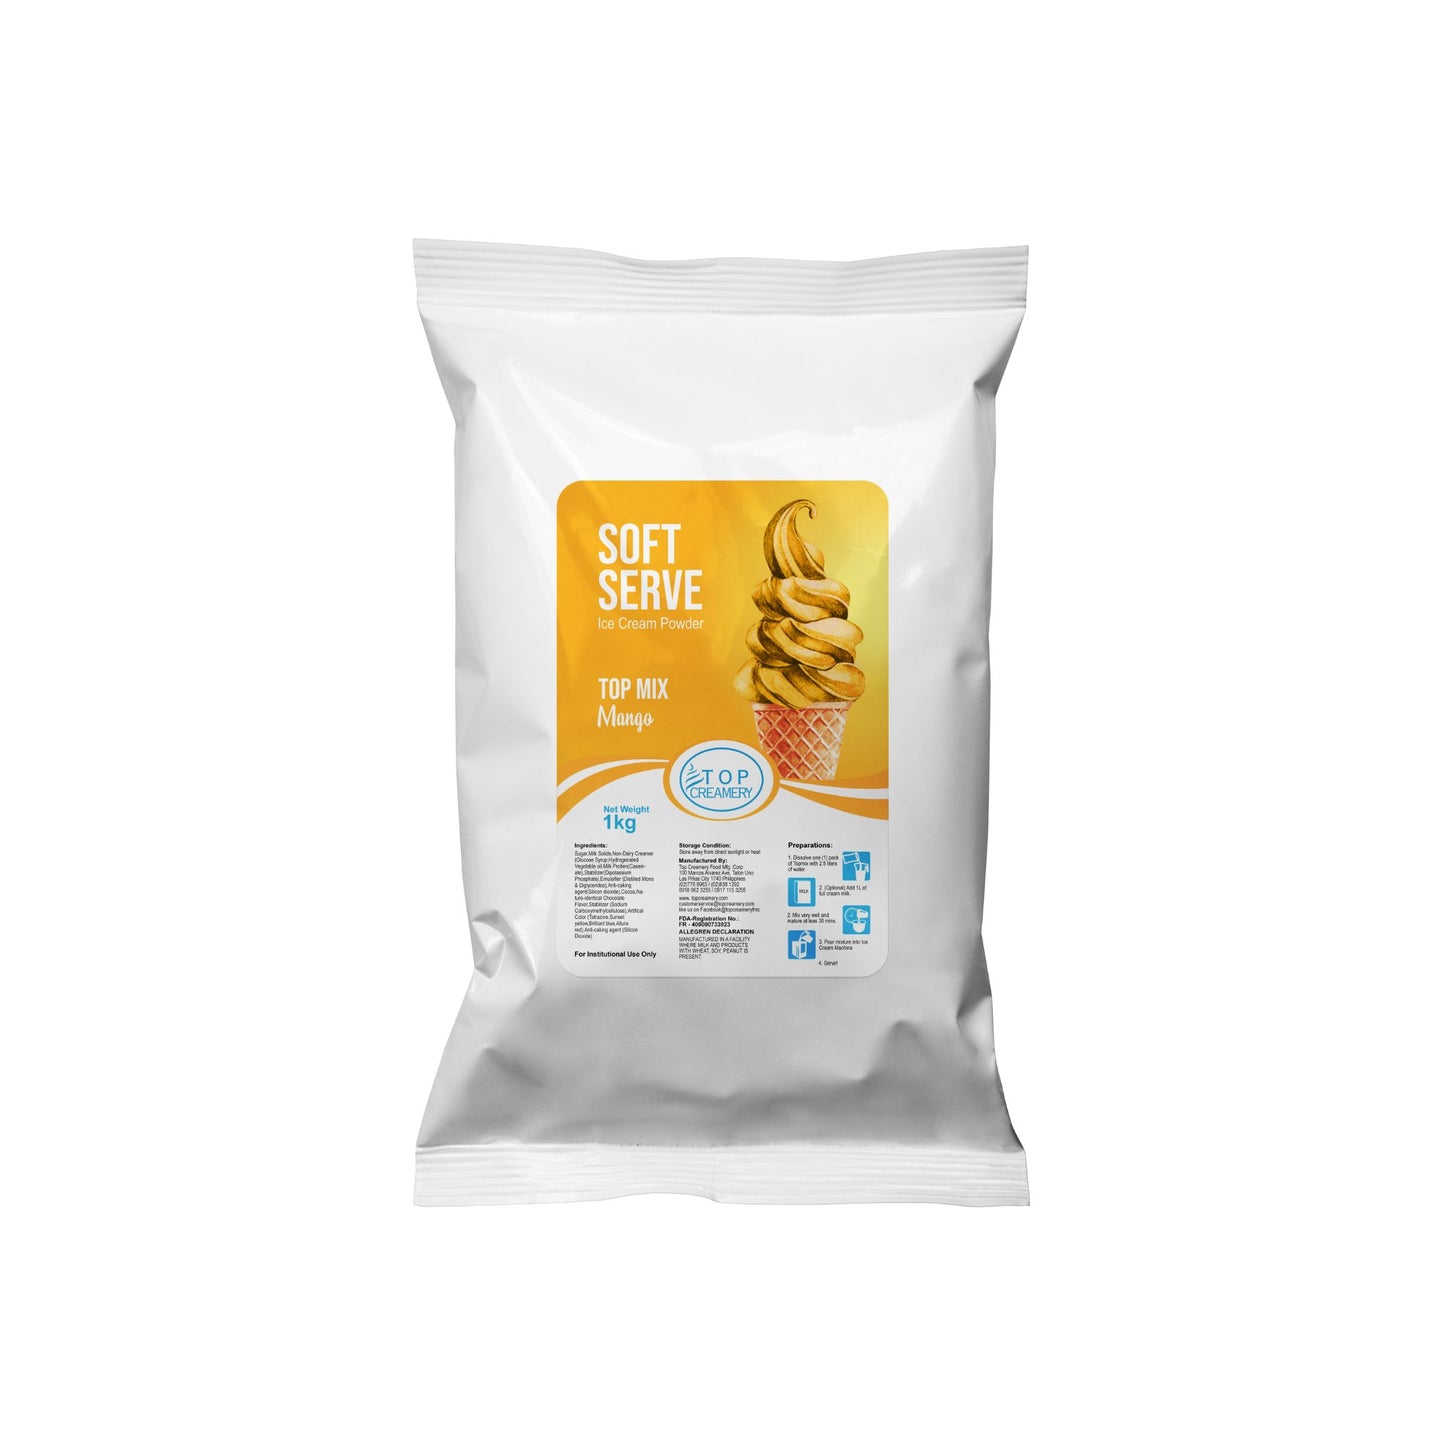 TOP Creamery Topmix Mango Soft Serve Ice Cream Powder Premix 1kg - Kreme City Supplies